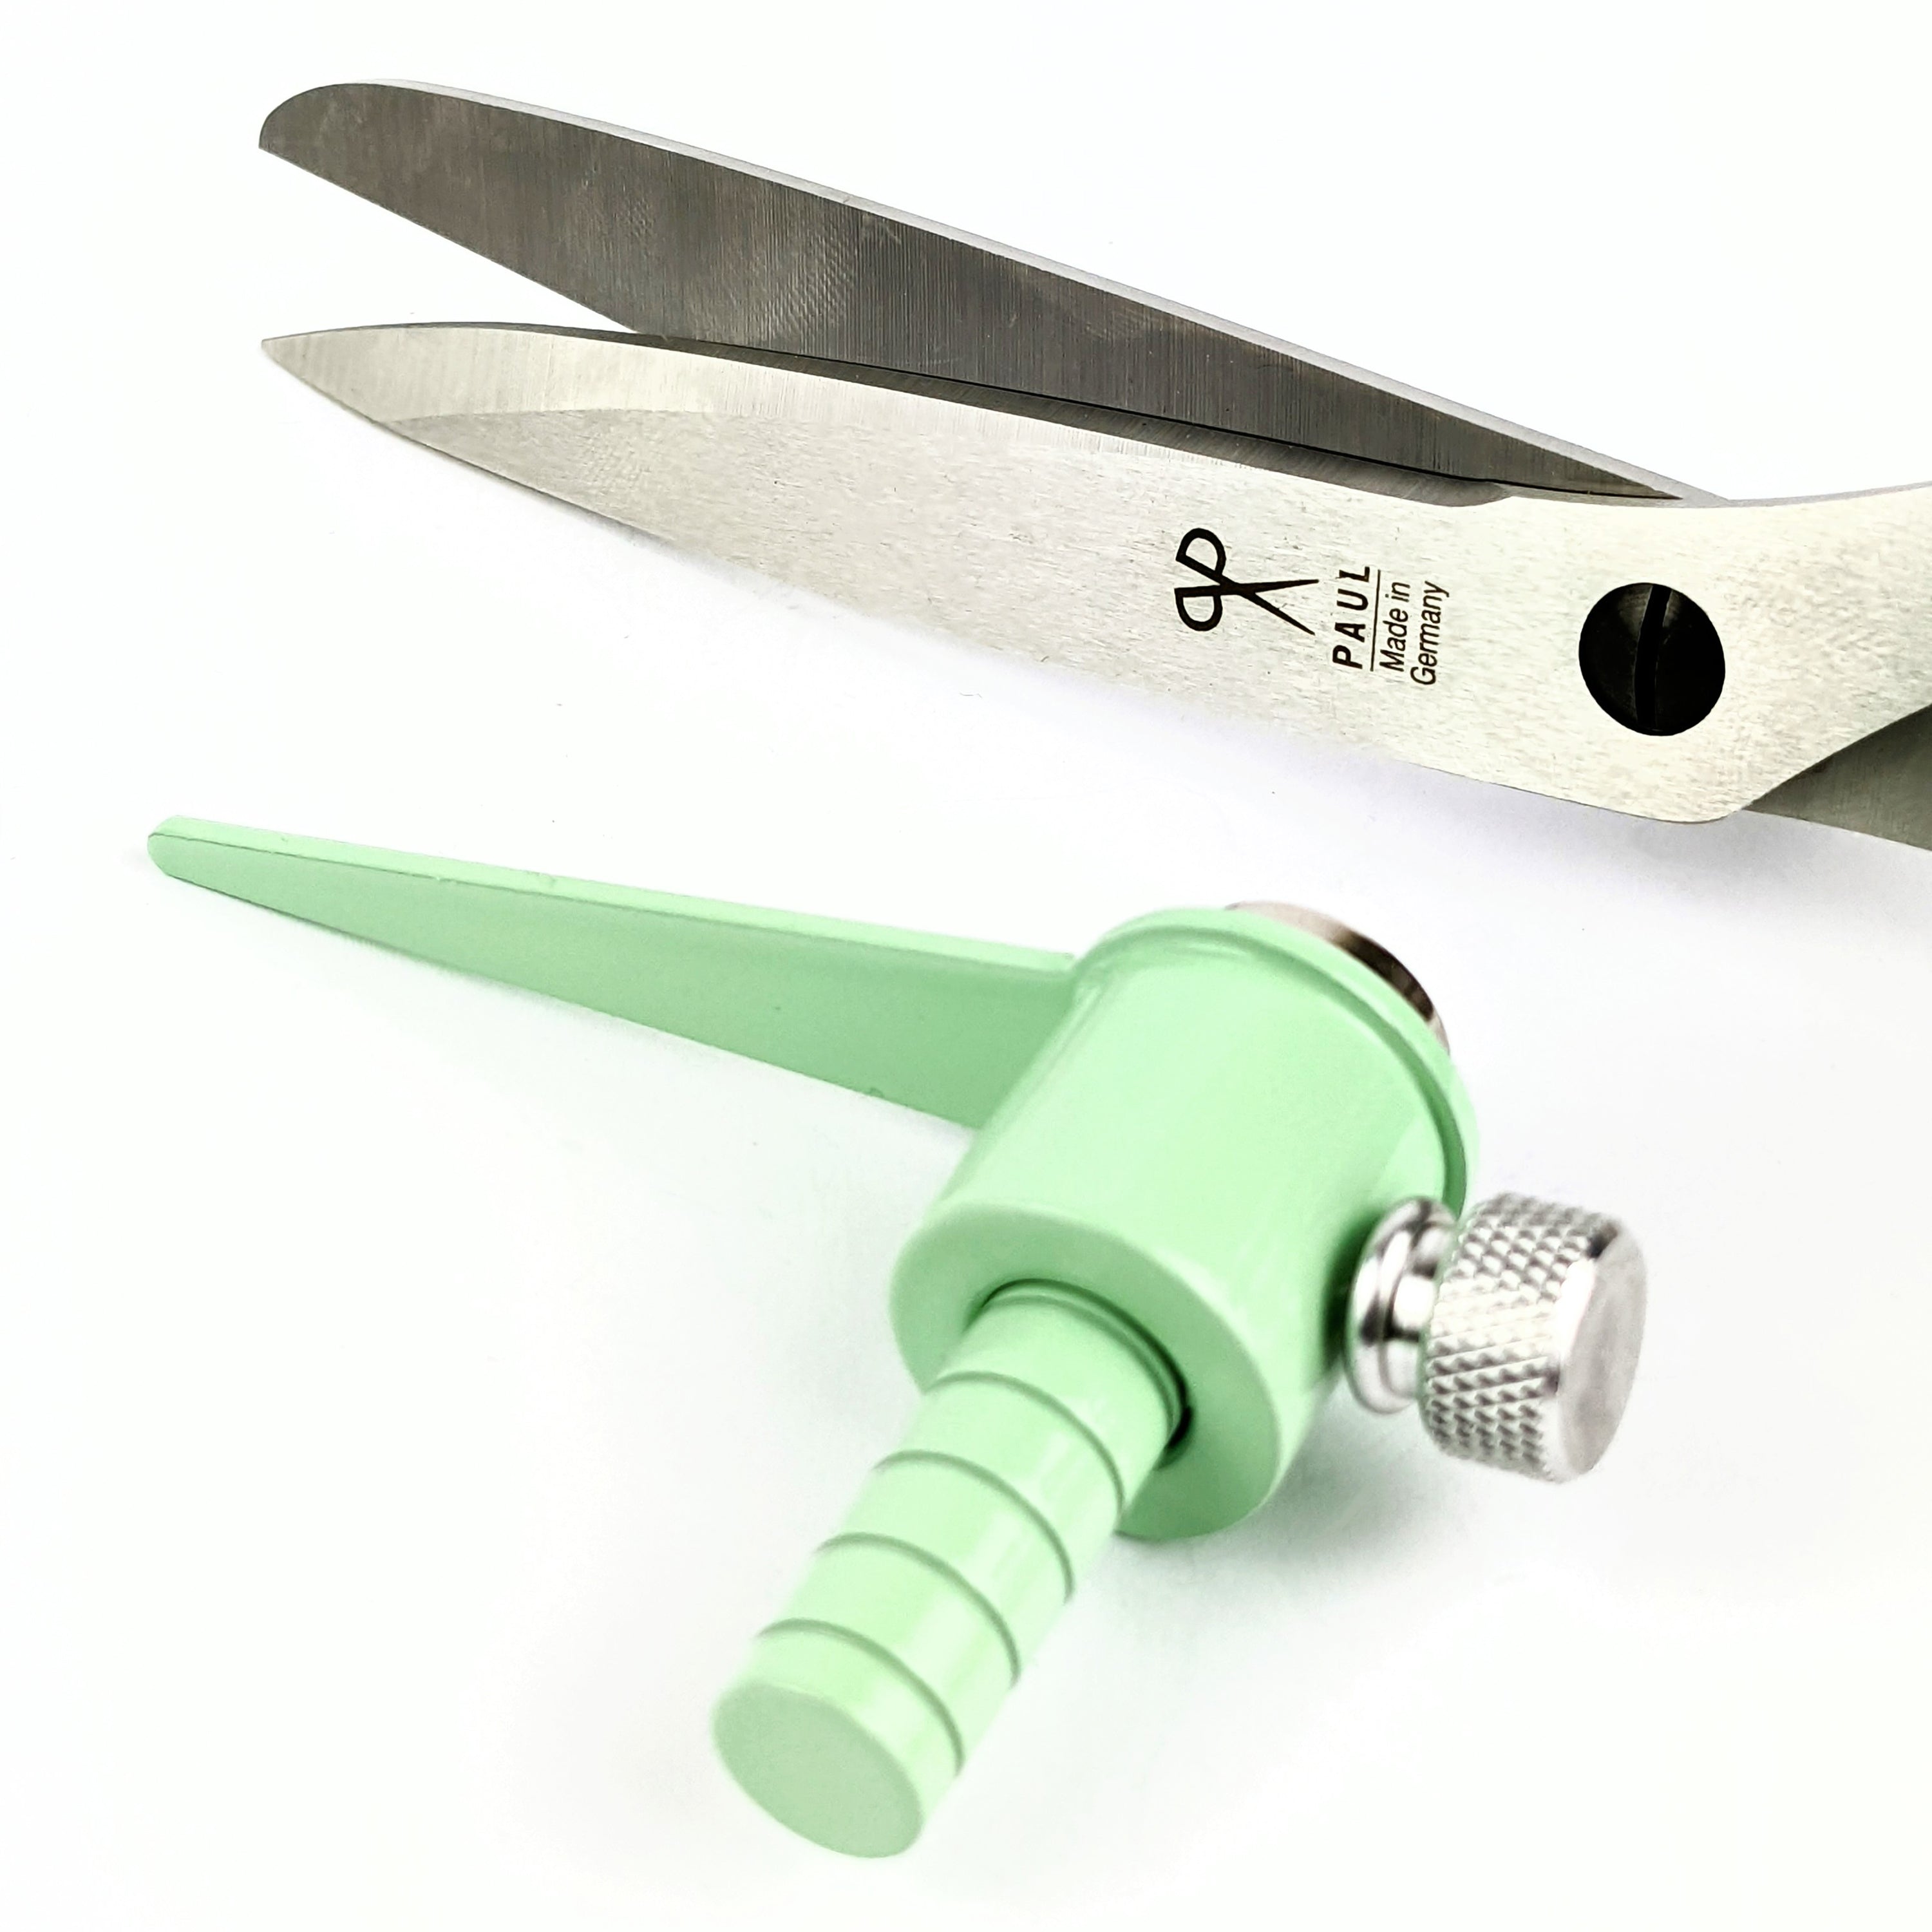 Small scissors set (color edition)